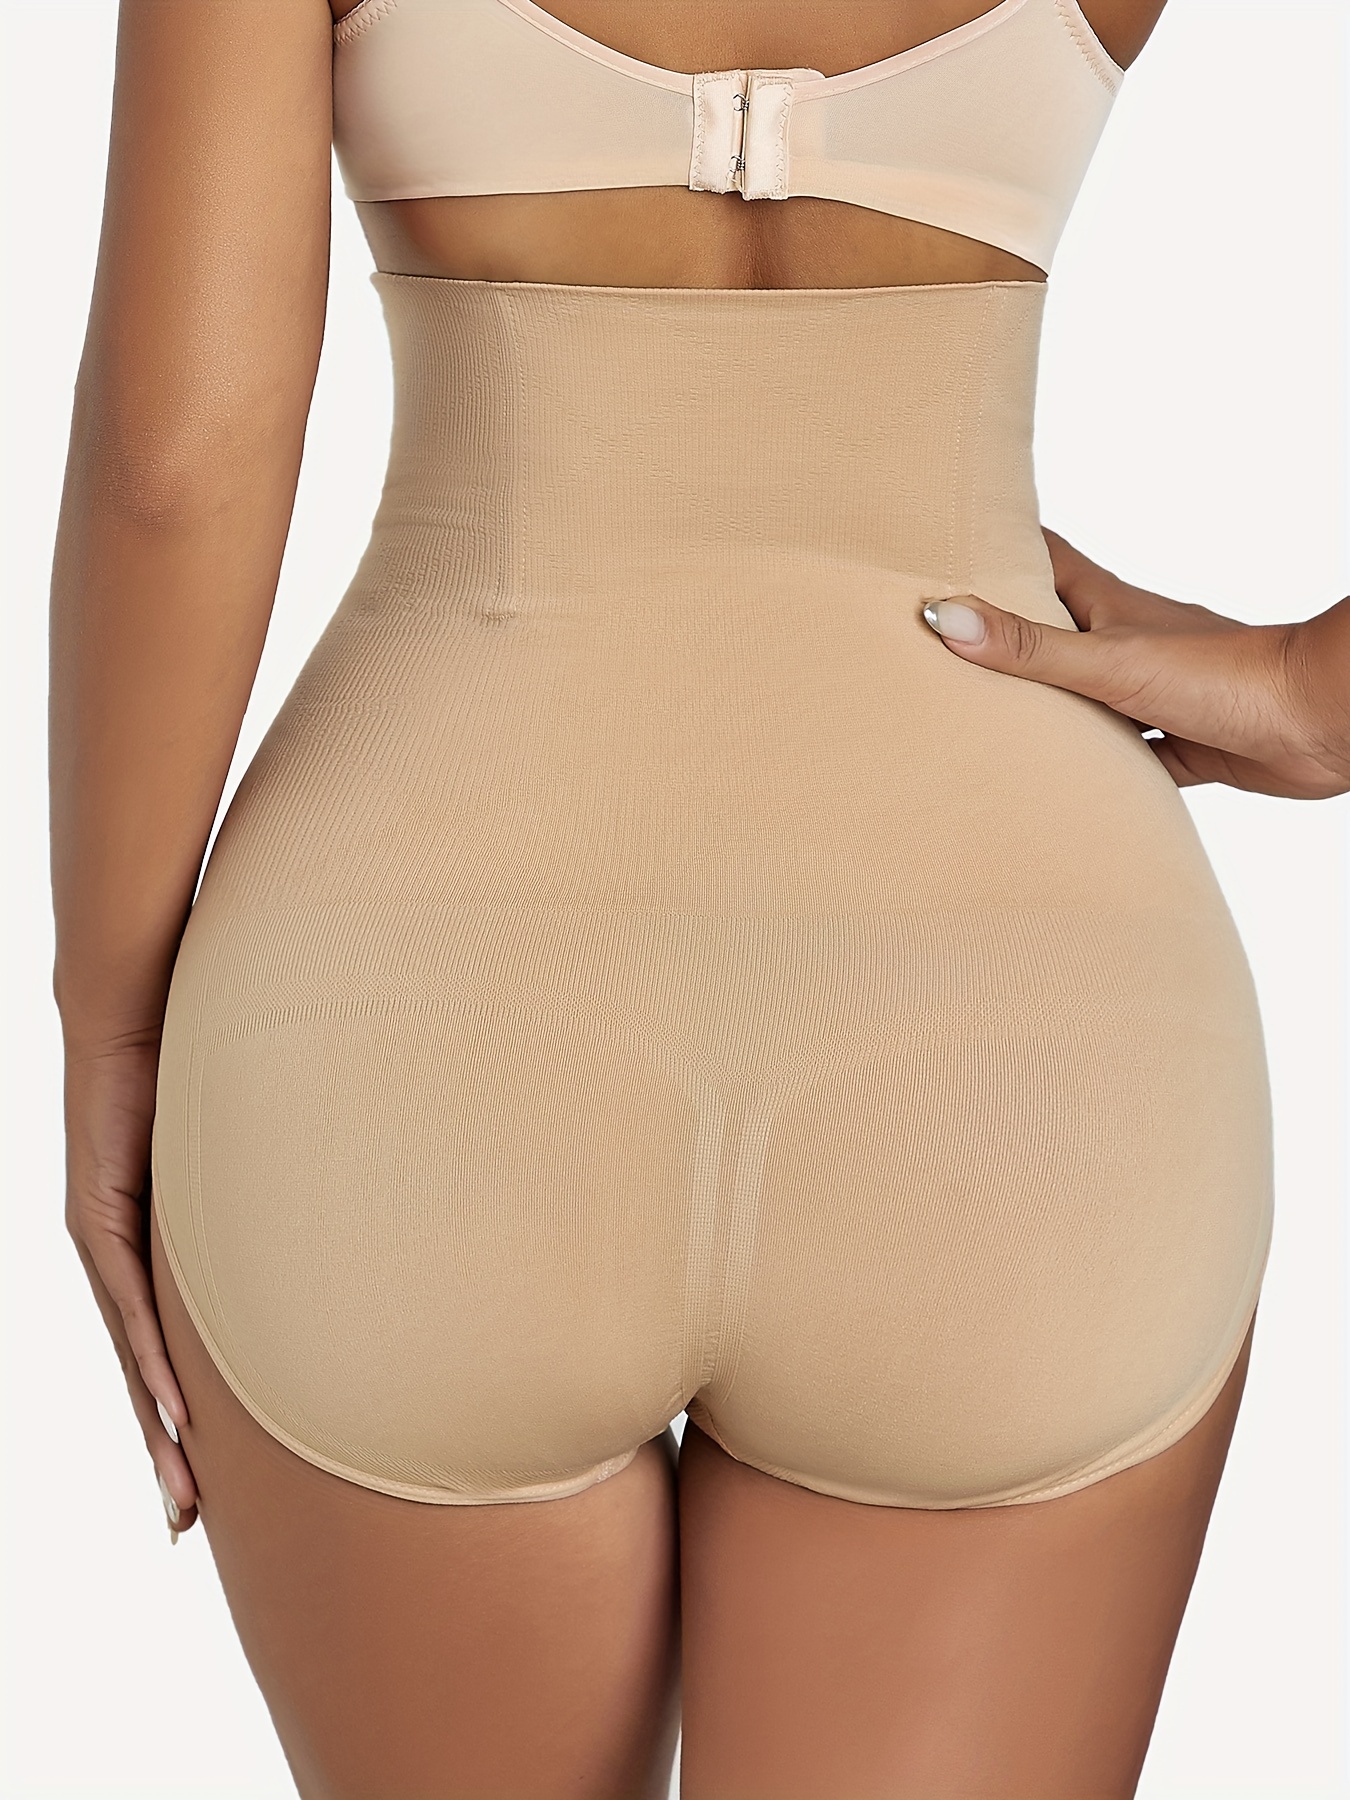 shpwfbe underwear women 2pc high waist shapewear ie tummy control